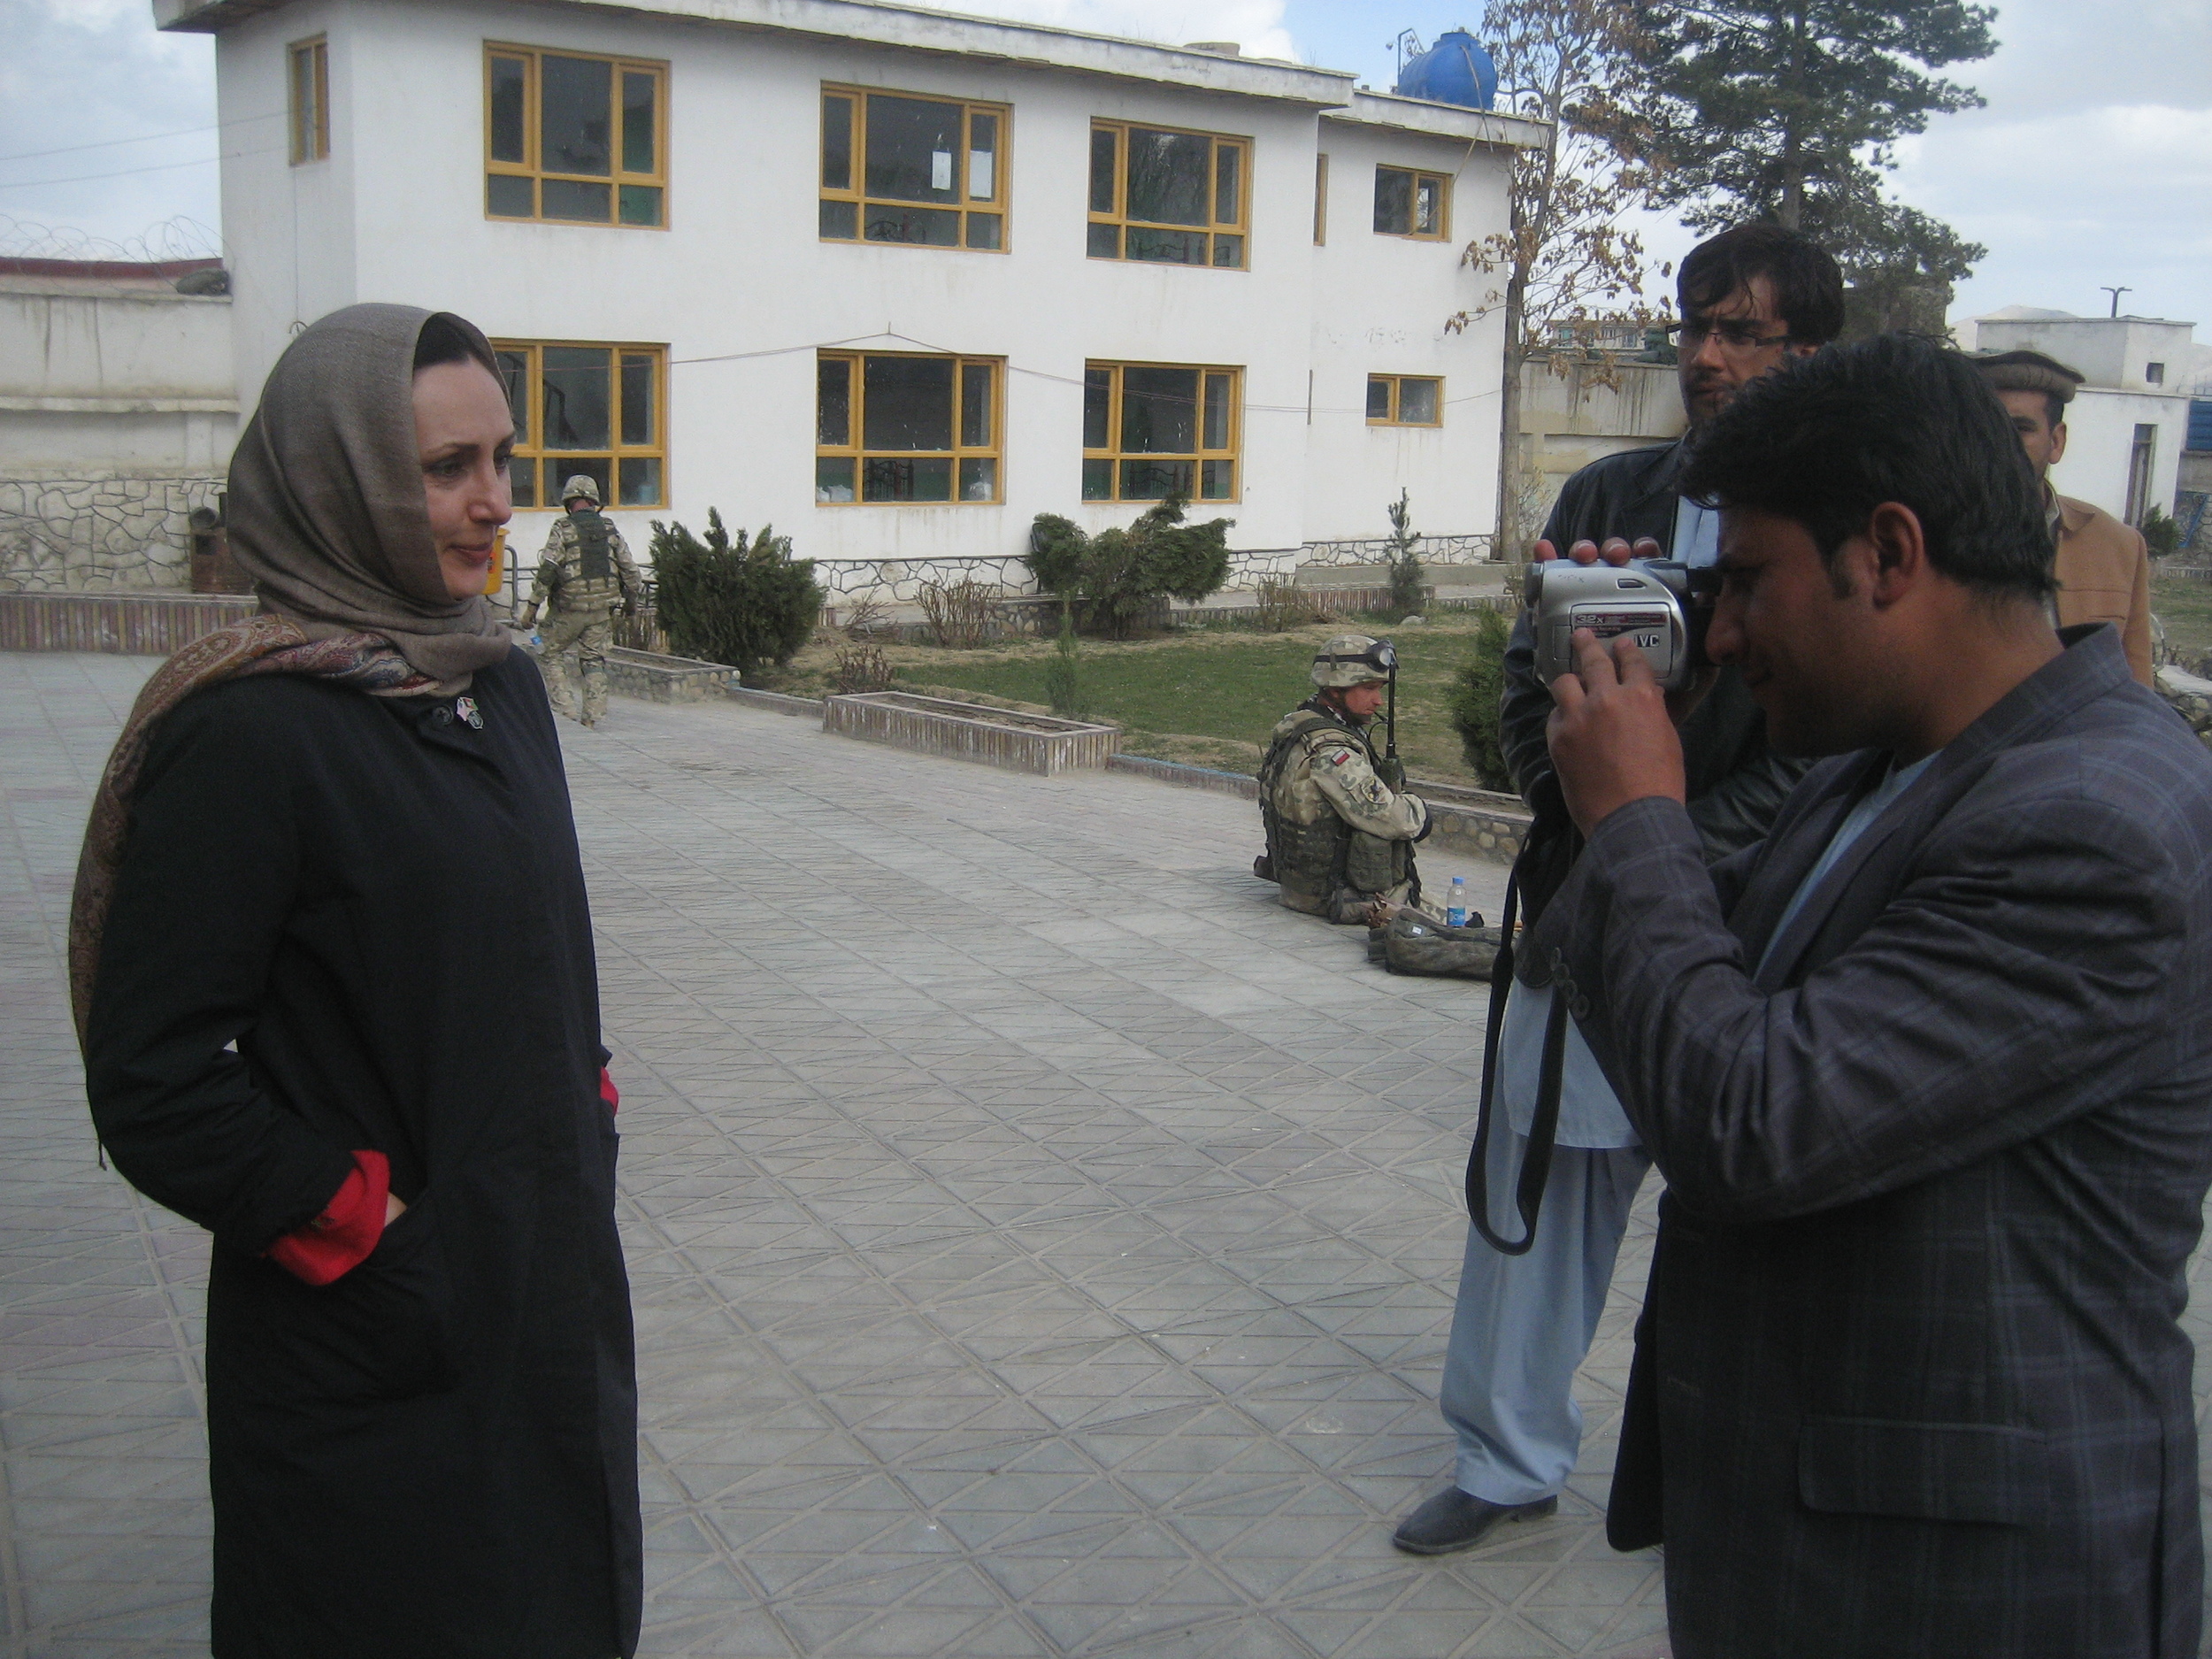 Governor's Compound—Ghazni, Afghanistan